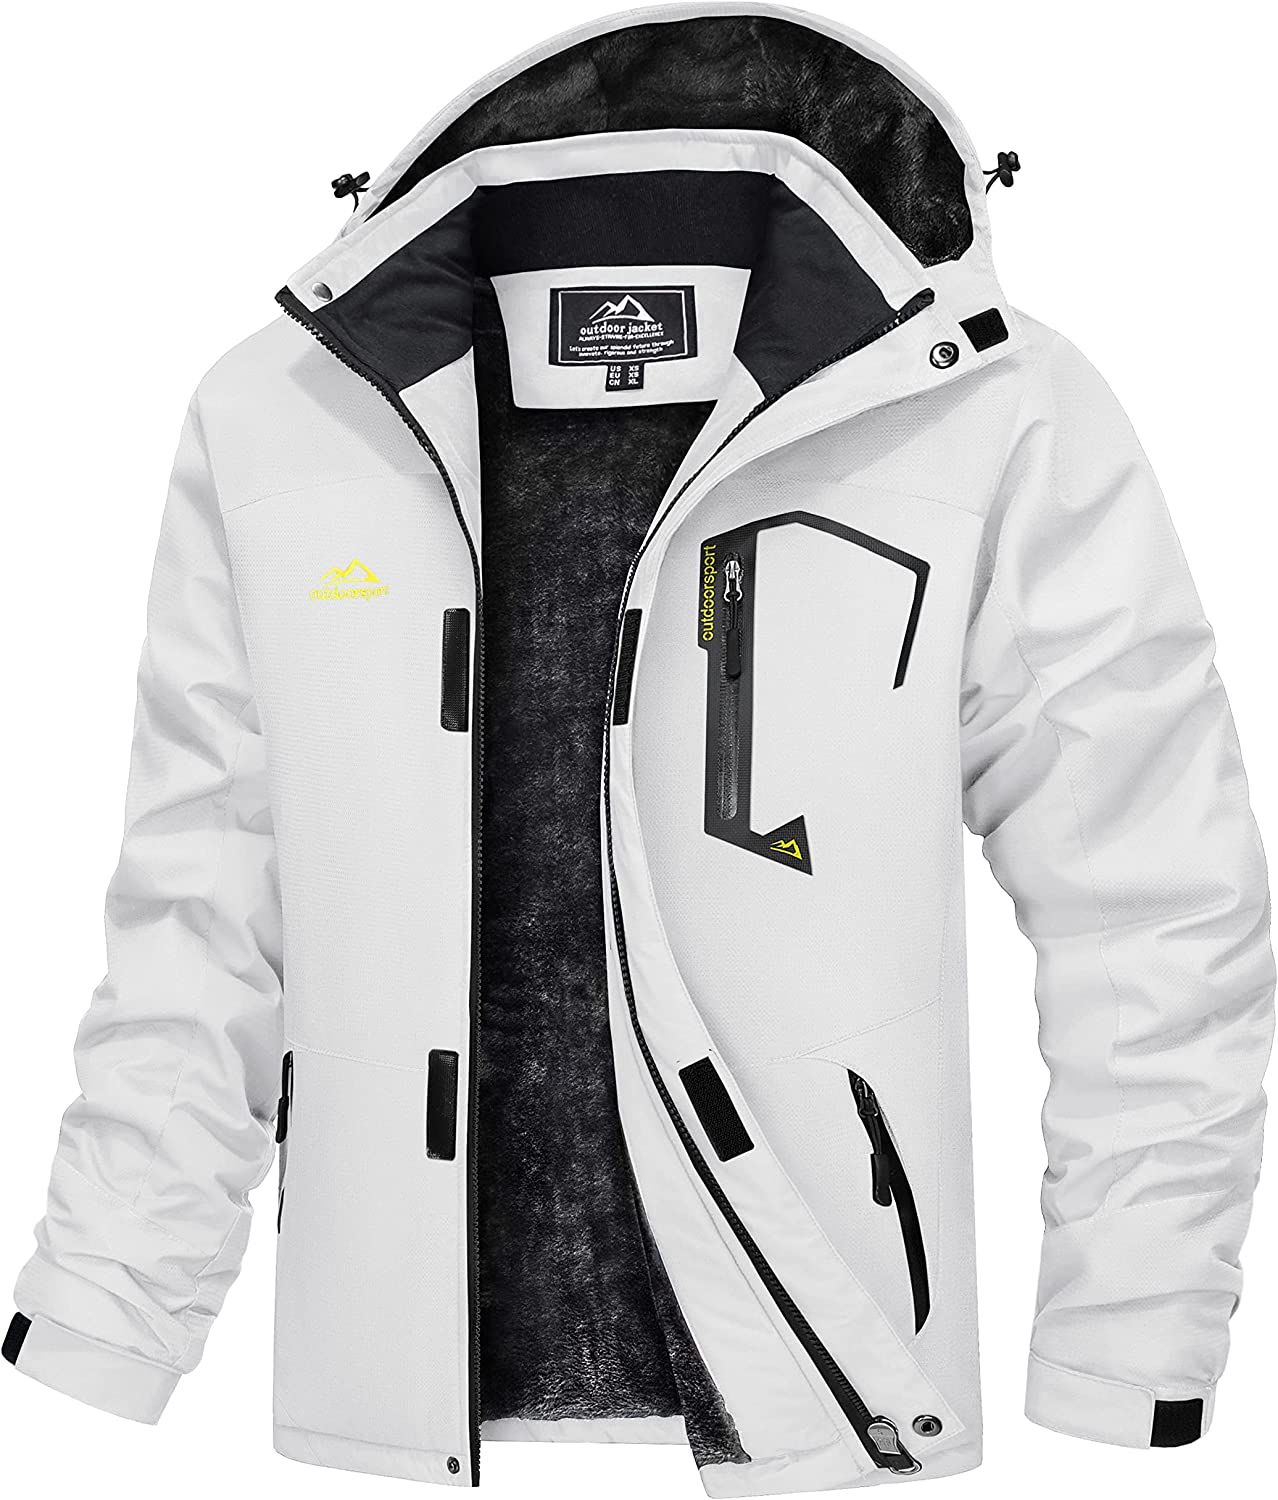 MAGCOMSEN Men's Winter Coats Waterproof Ski Snow Jacket Warm Fleece Jacket Parka Raincoats with M... | Amazon (US)